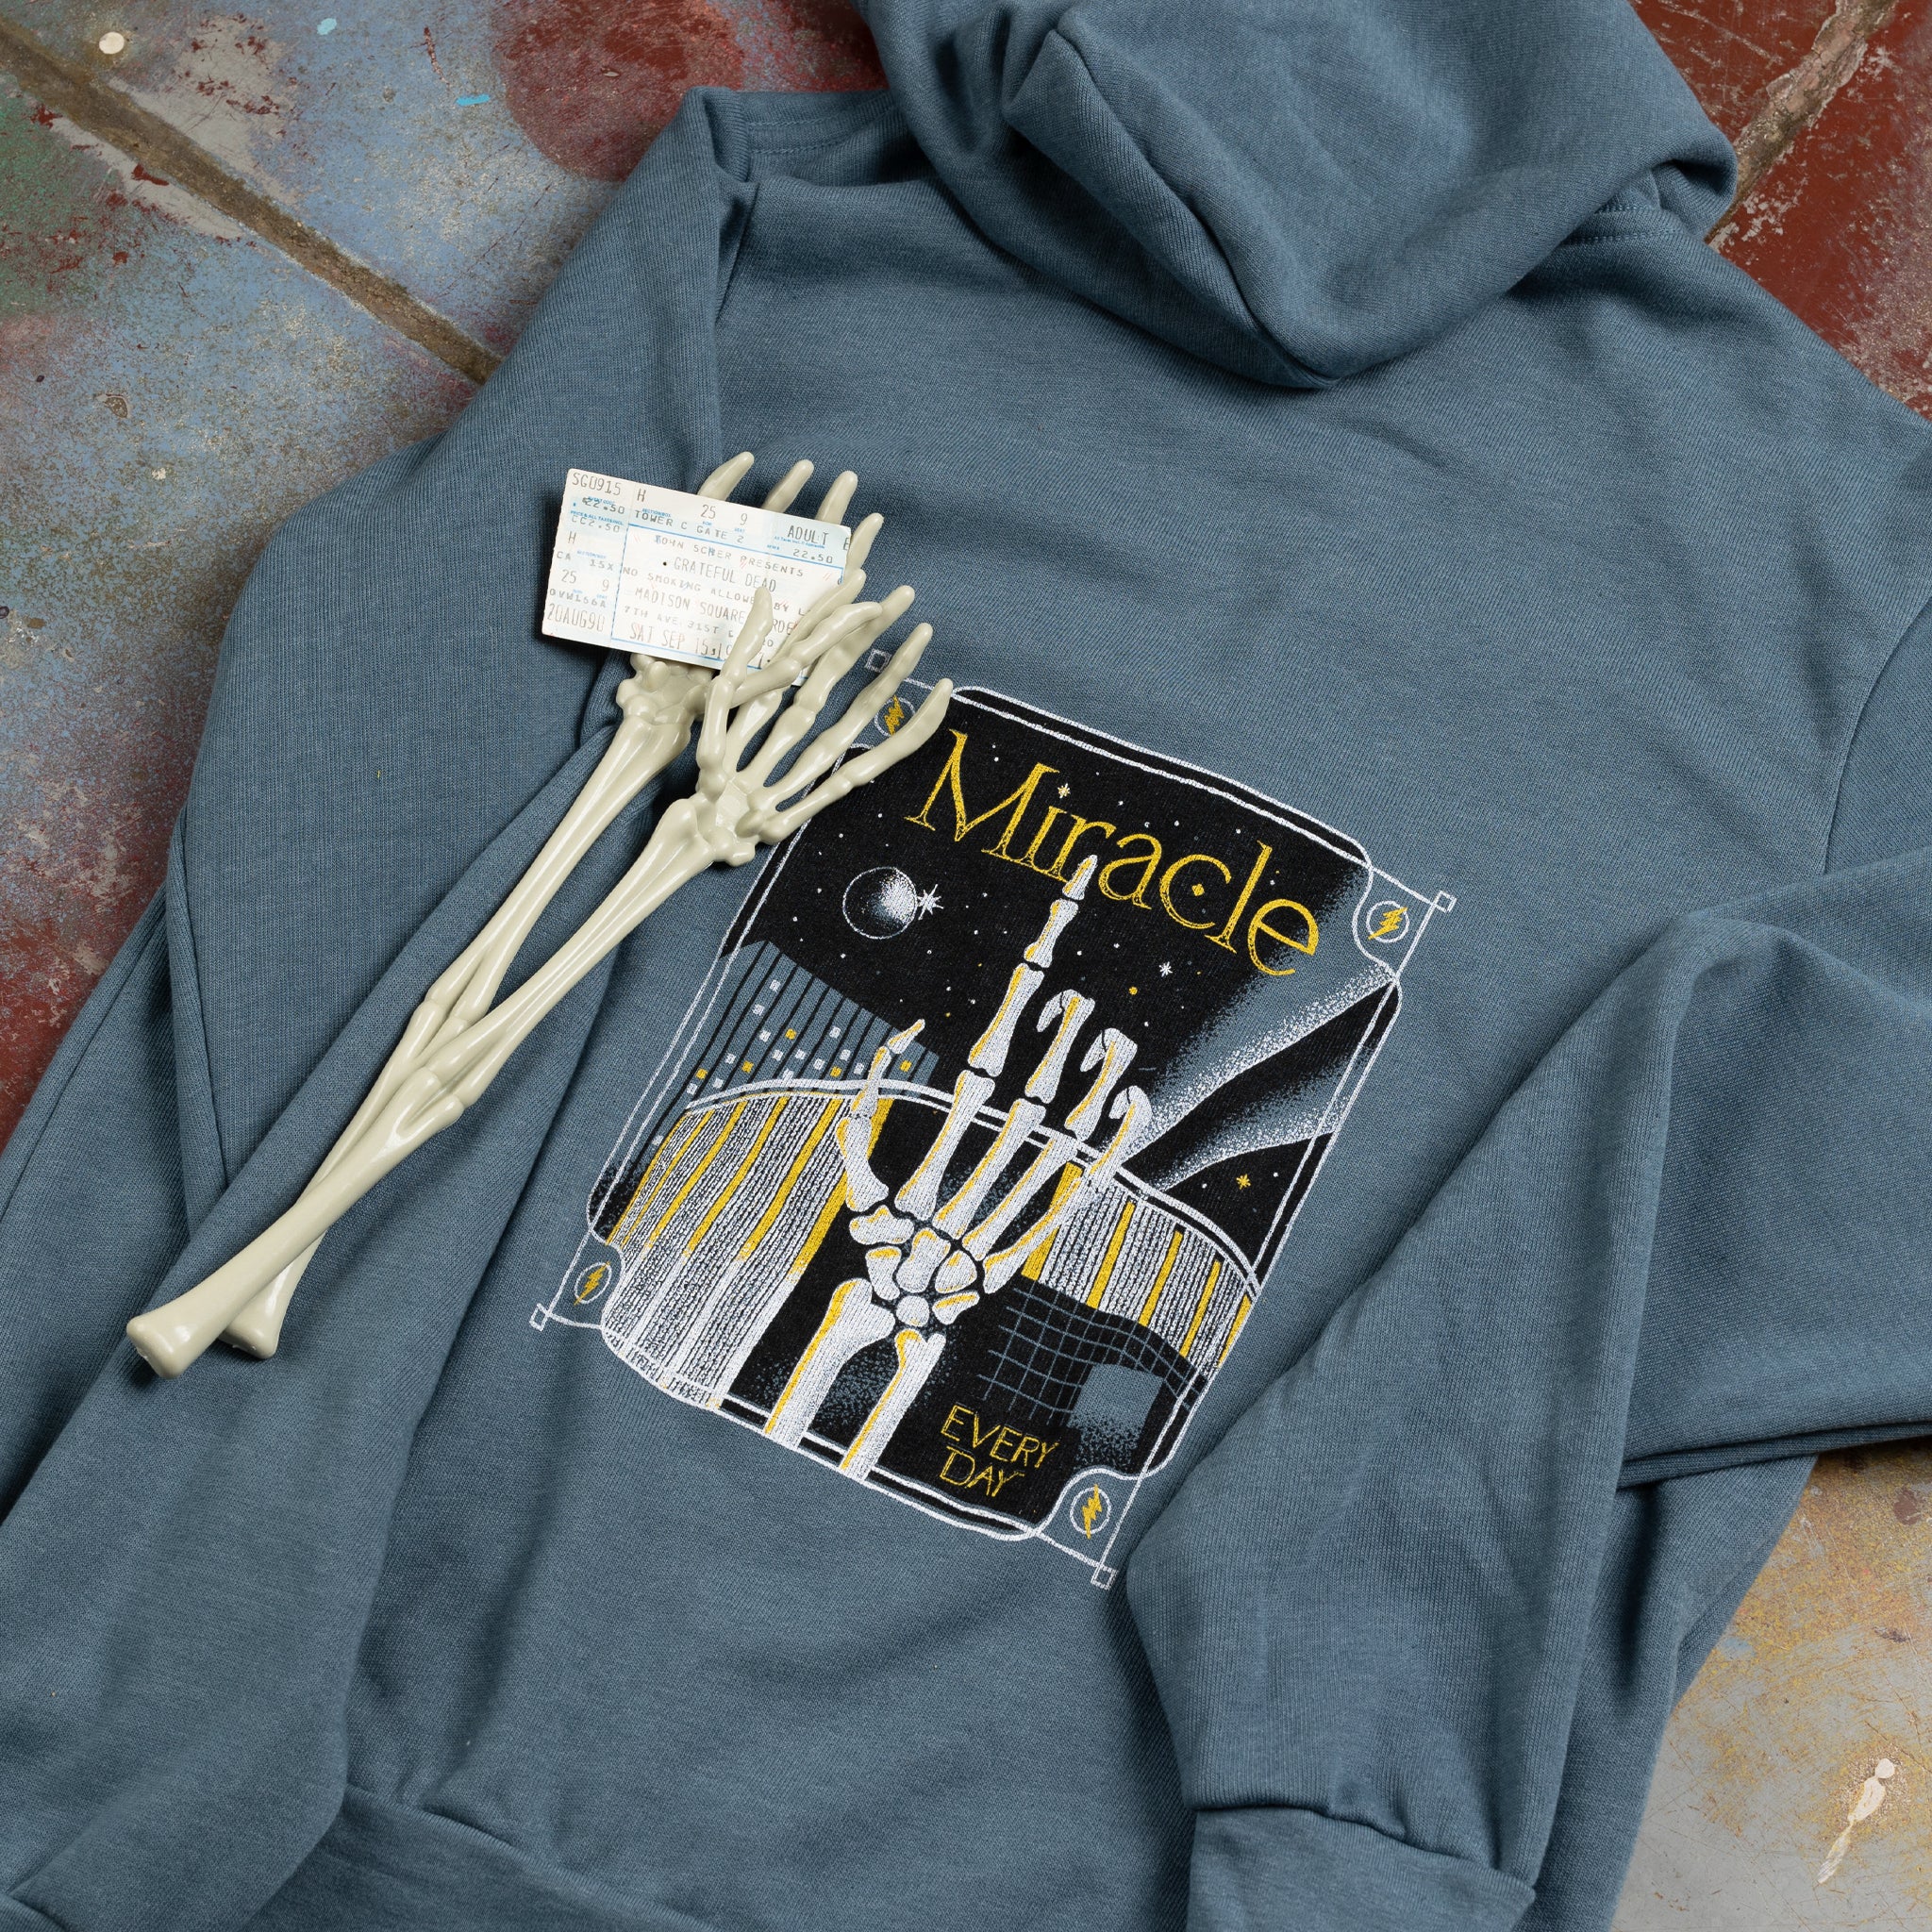  Tee Miracle Design Your OWN Hoodie for Men & Women - Custom  Jersey Hoodies - Pullover Team Sweatshirts : Sports & Outdoors